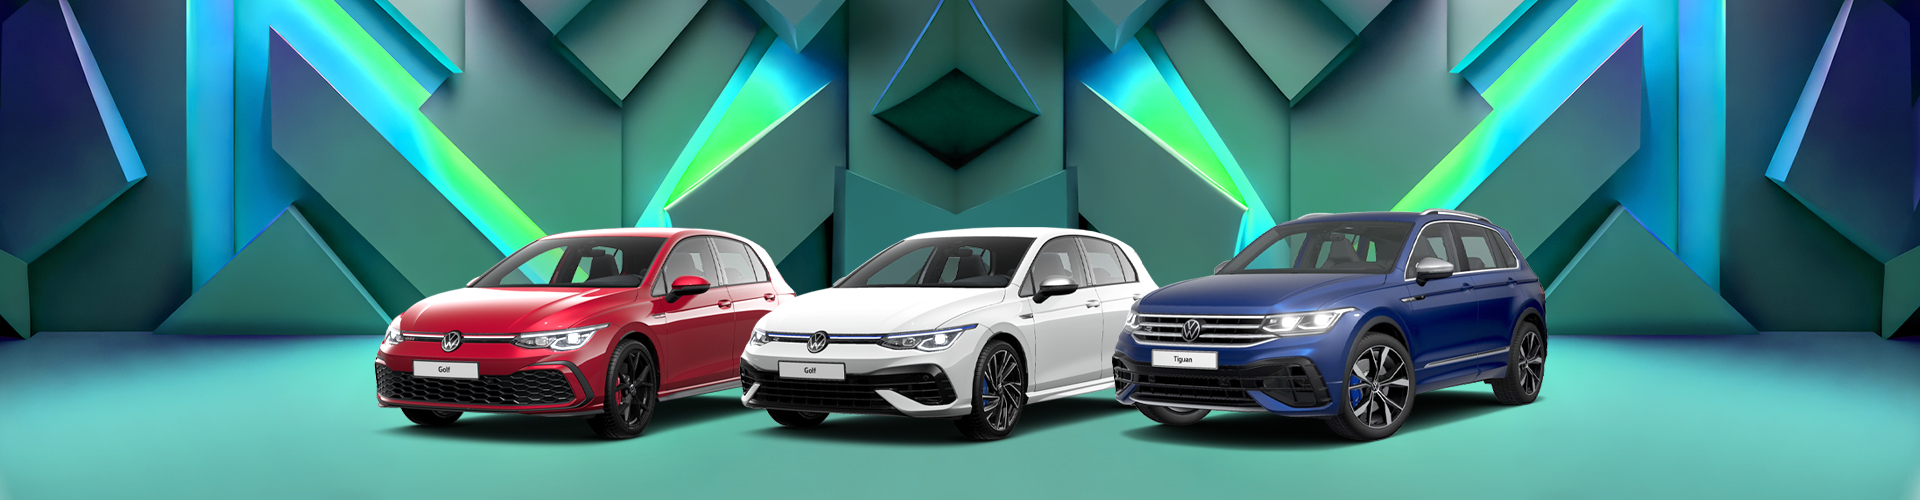 VW Sportmodelle Leasing Angebote